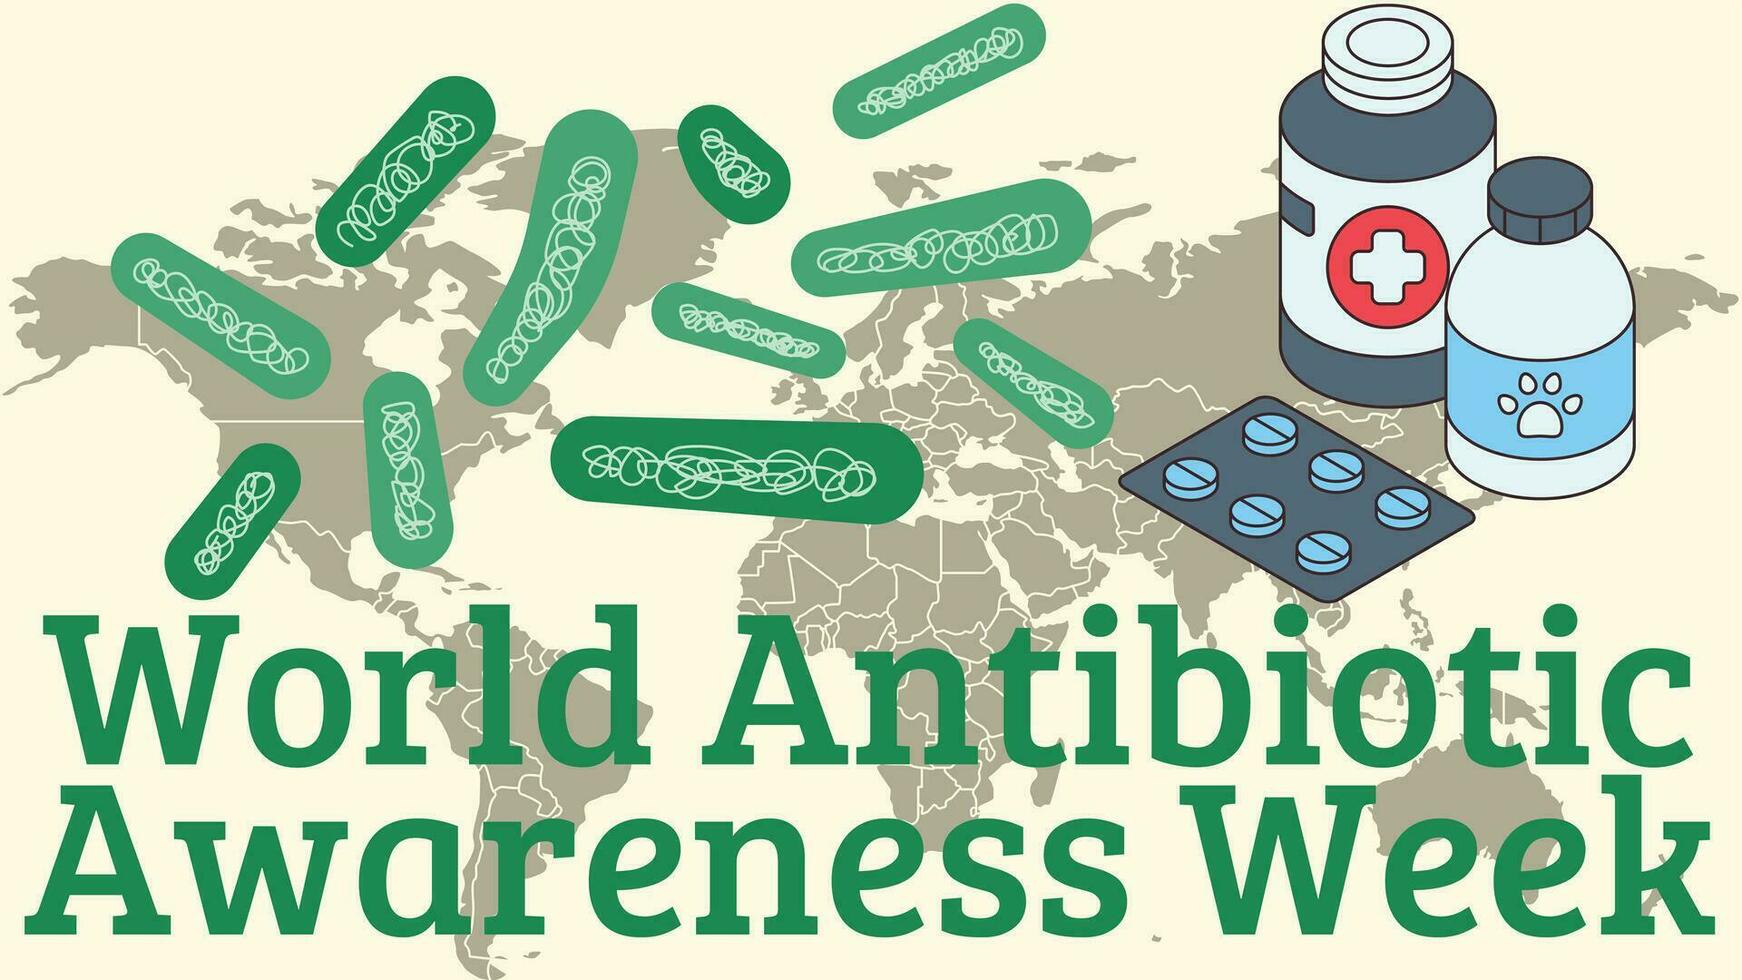 monde antibiotique conscience la semaine vecteur